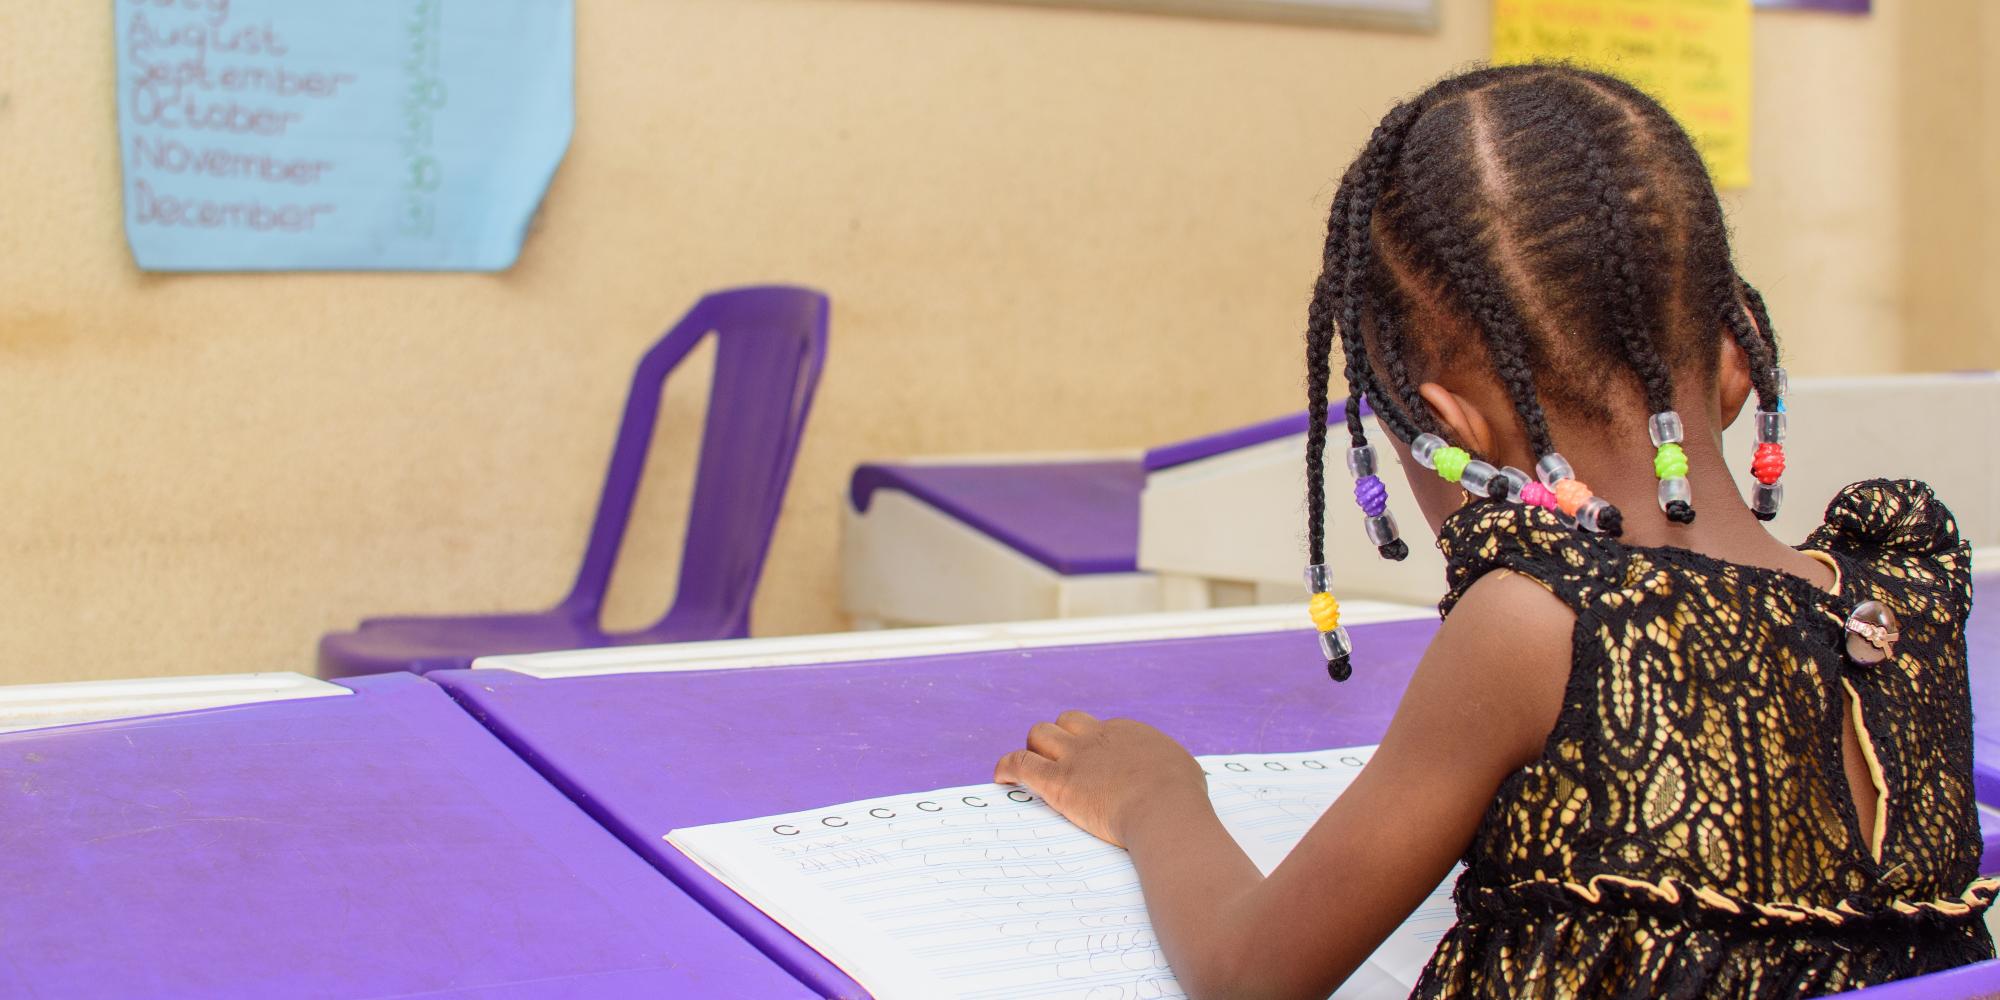 Nigerian school girl facing board, working intently on her school work